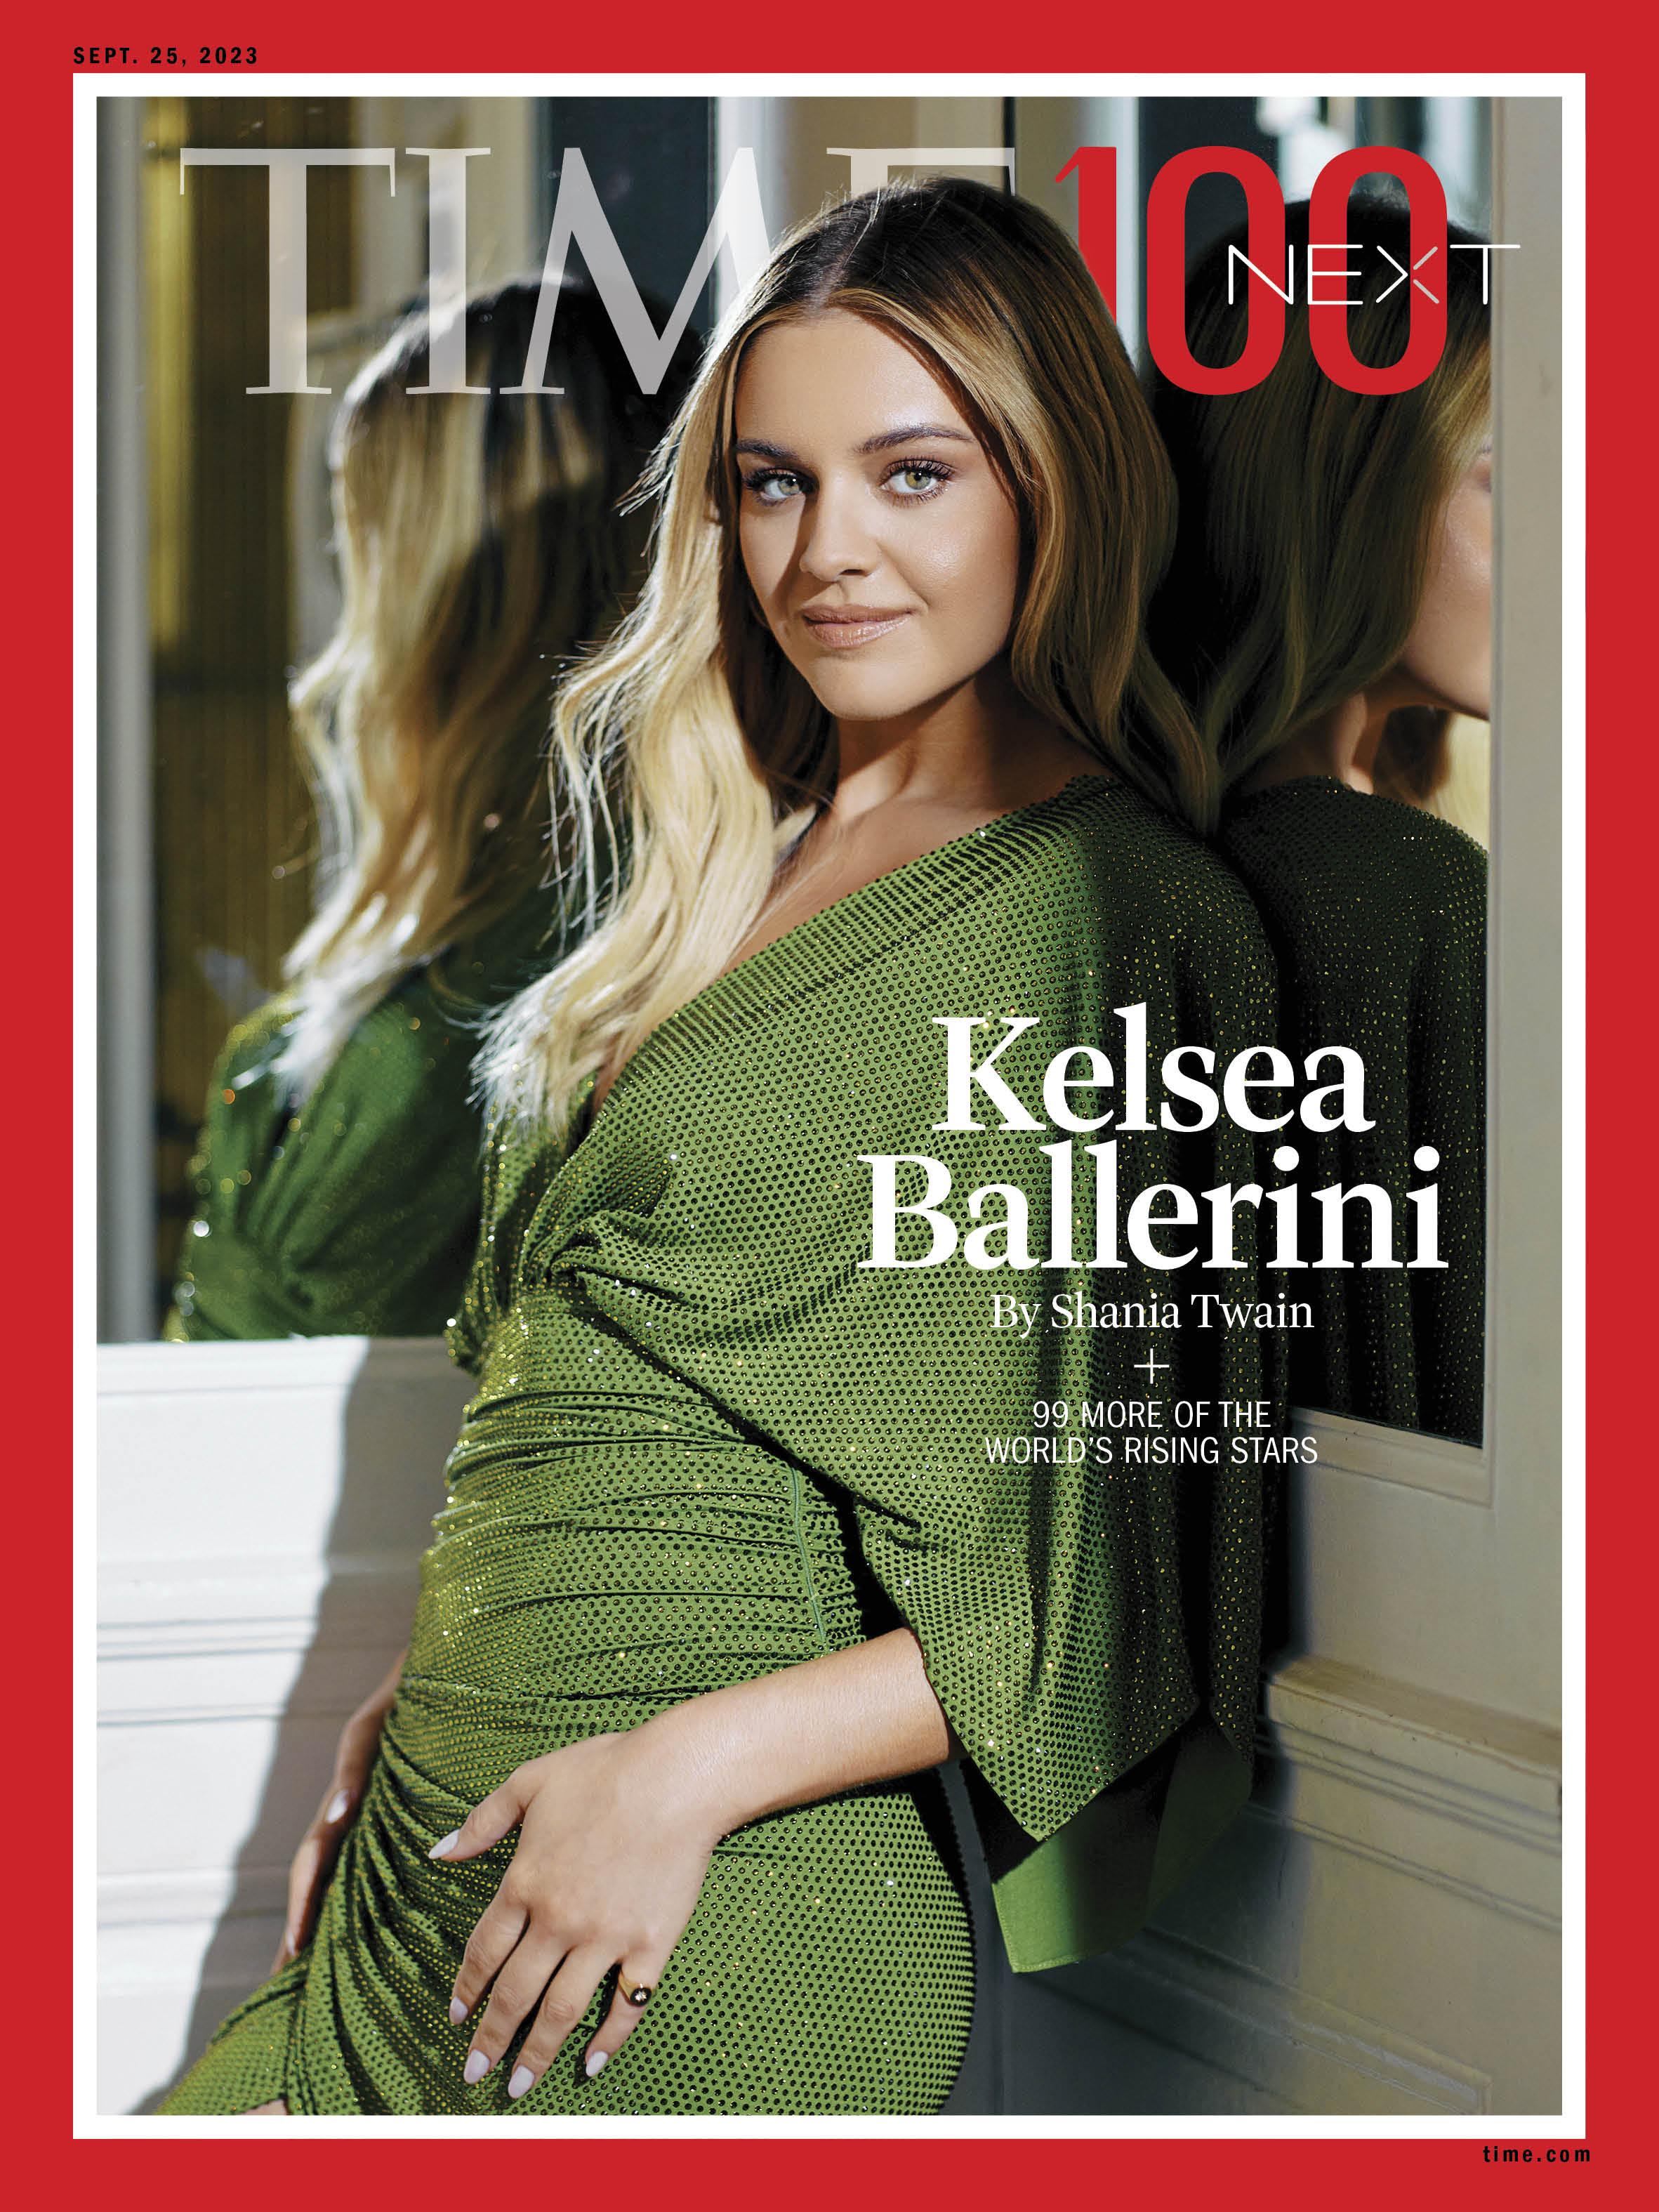 Time 100 Next Kelsea Ballerini Time Magazine cover